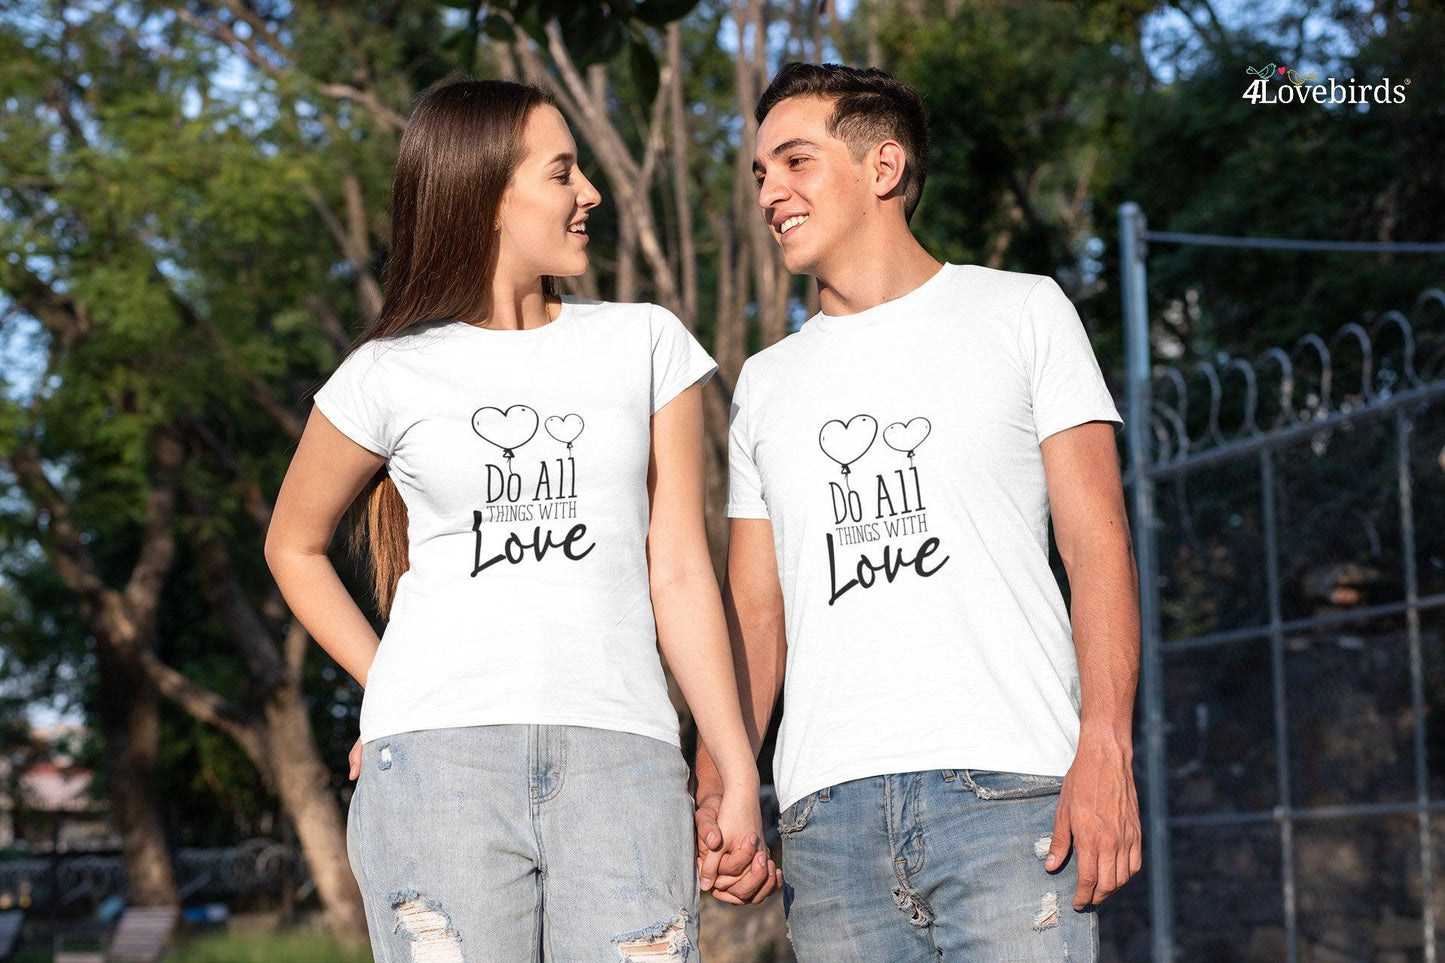 Do all things with love Hoodie, Lovers T-shirt, Gift for Couples, Valentine Sweatshirt, Boyfriend / Girlfriend Longsleeve, Cute Tshirt - 4Lovebirds